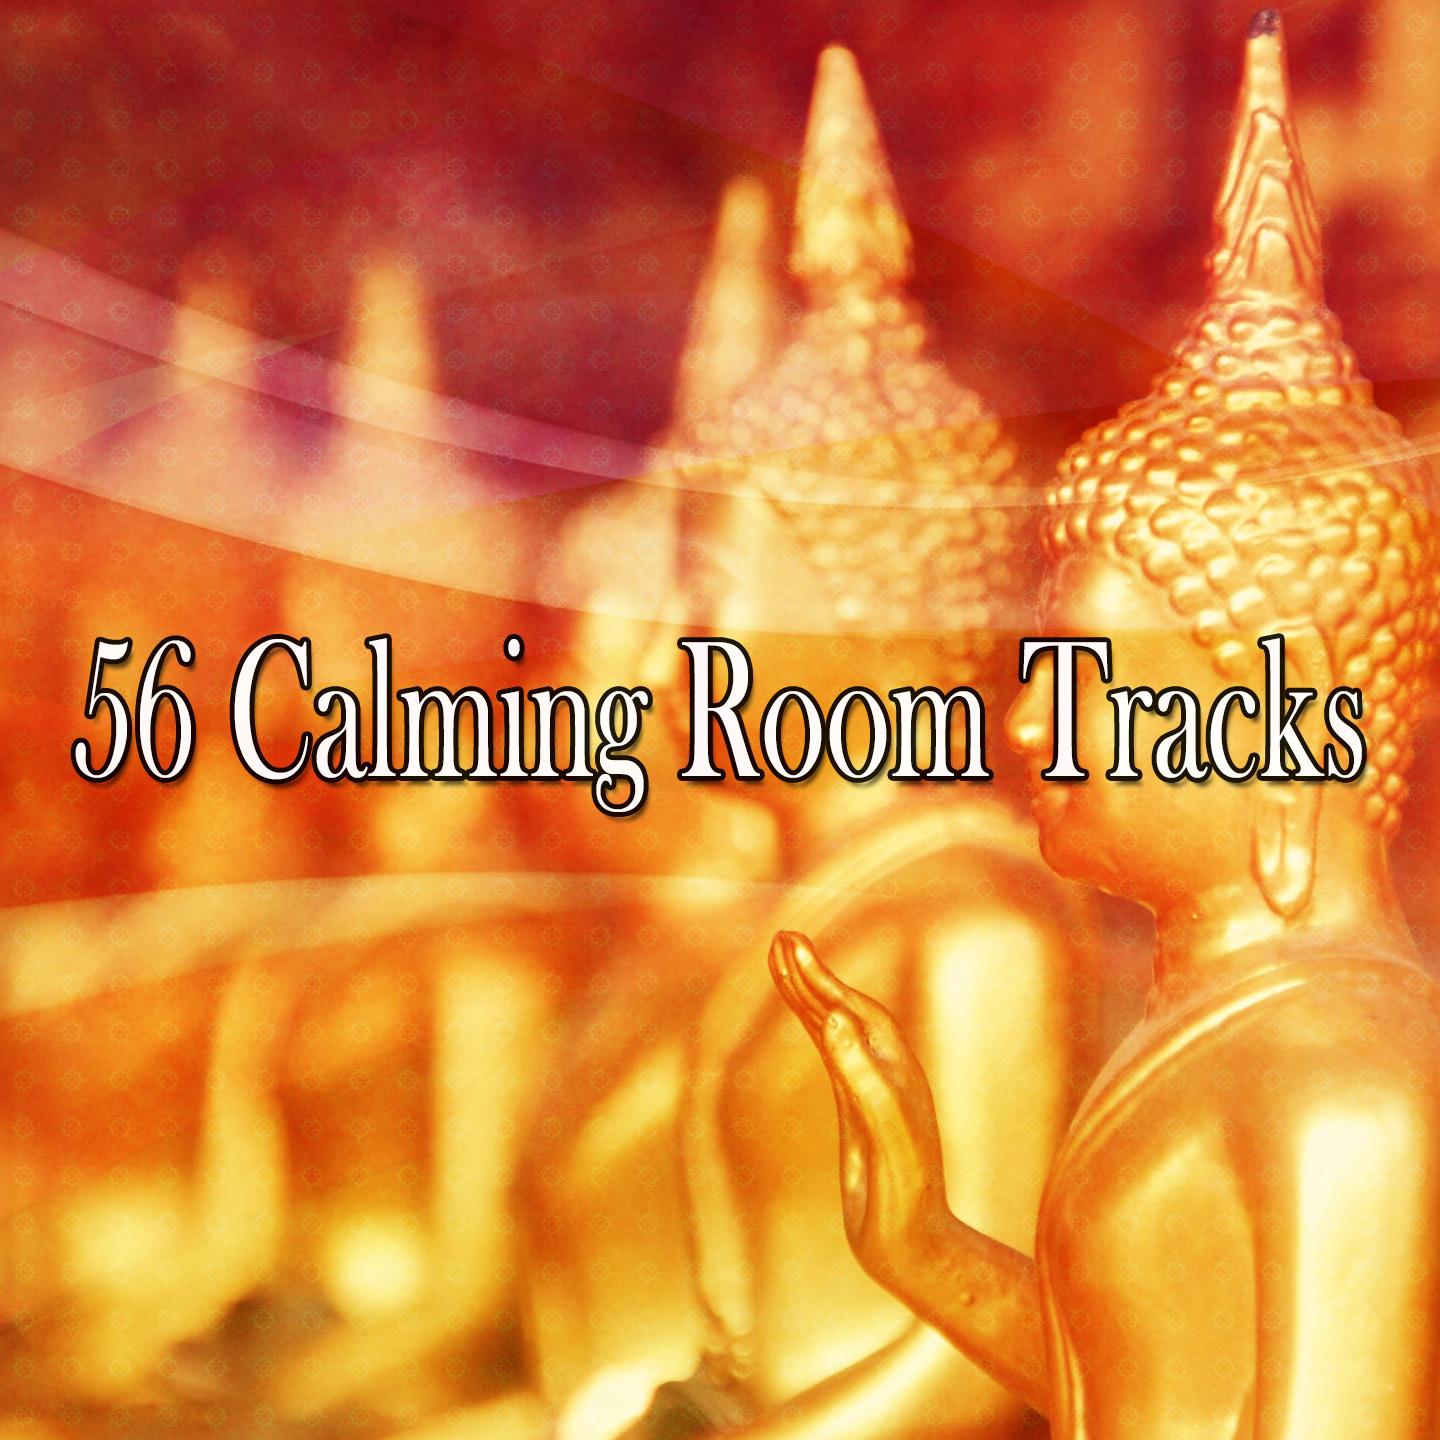 56 Calming Room Tracks